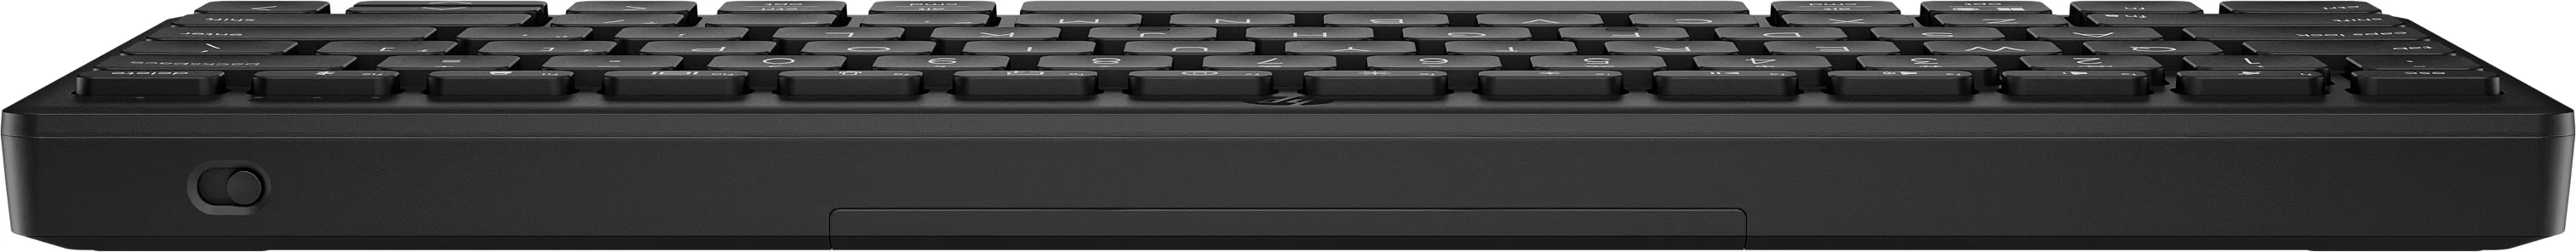 Vente HP 350 BLK Compact Multi-Device Keyboard HP au meilleur prix - visuel 4